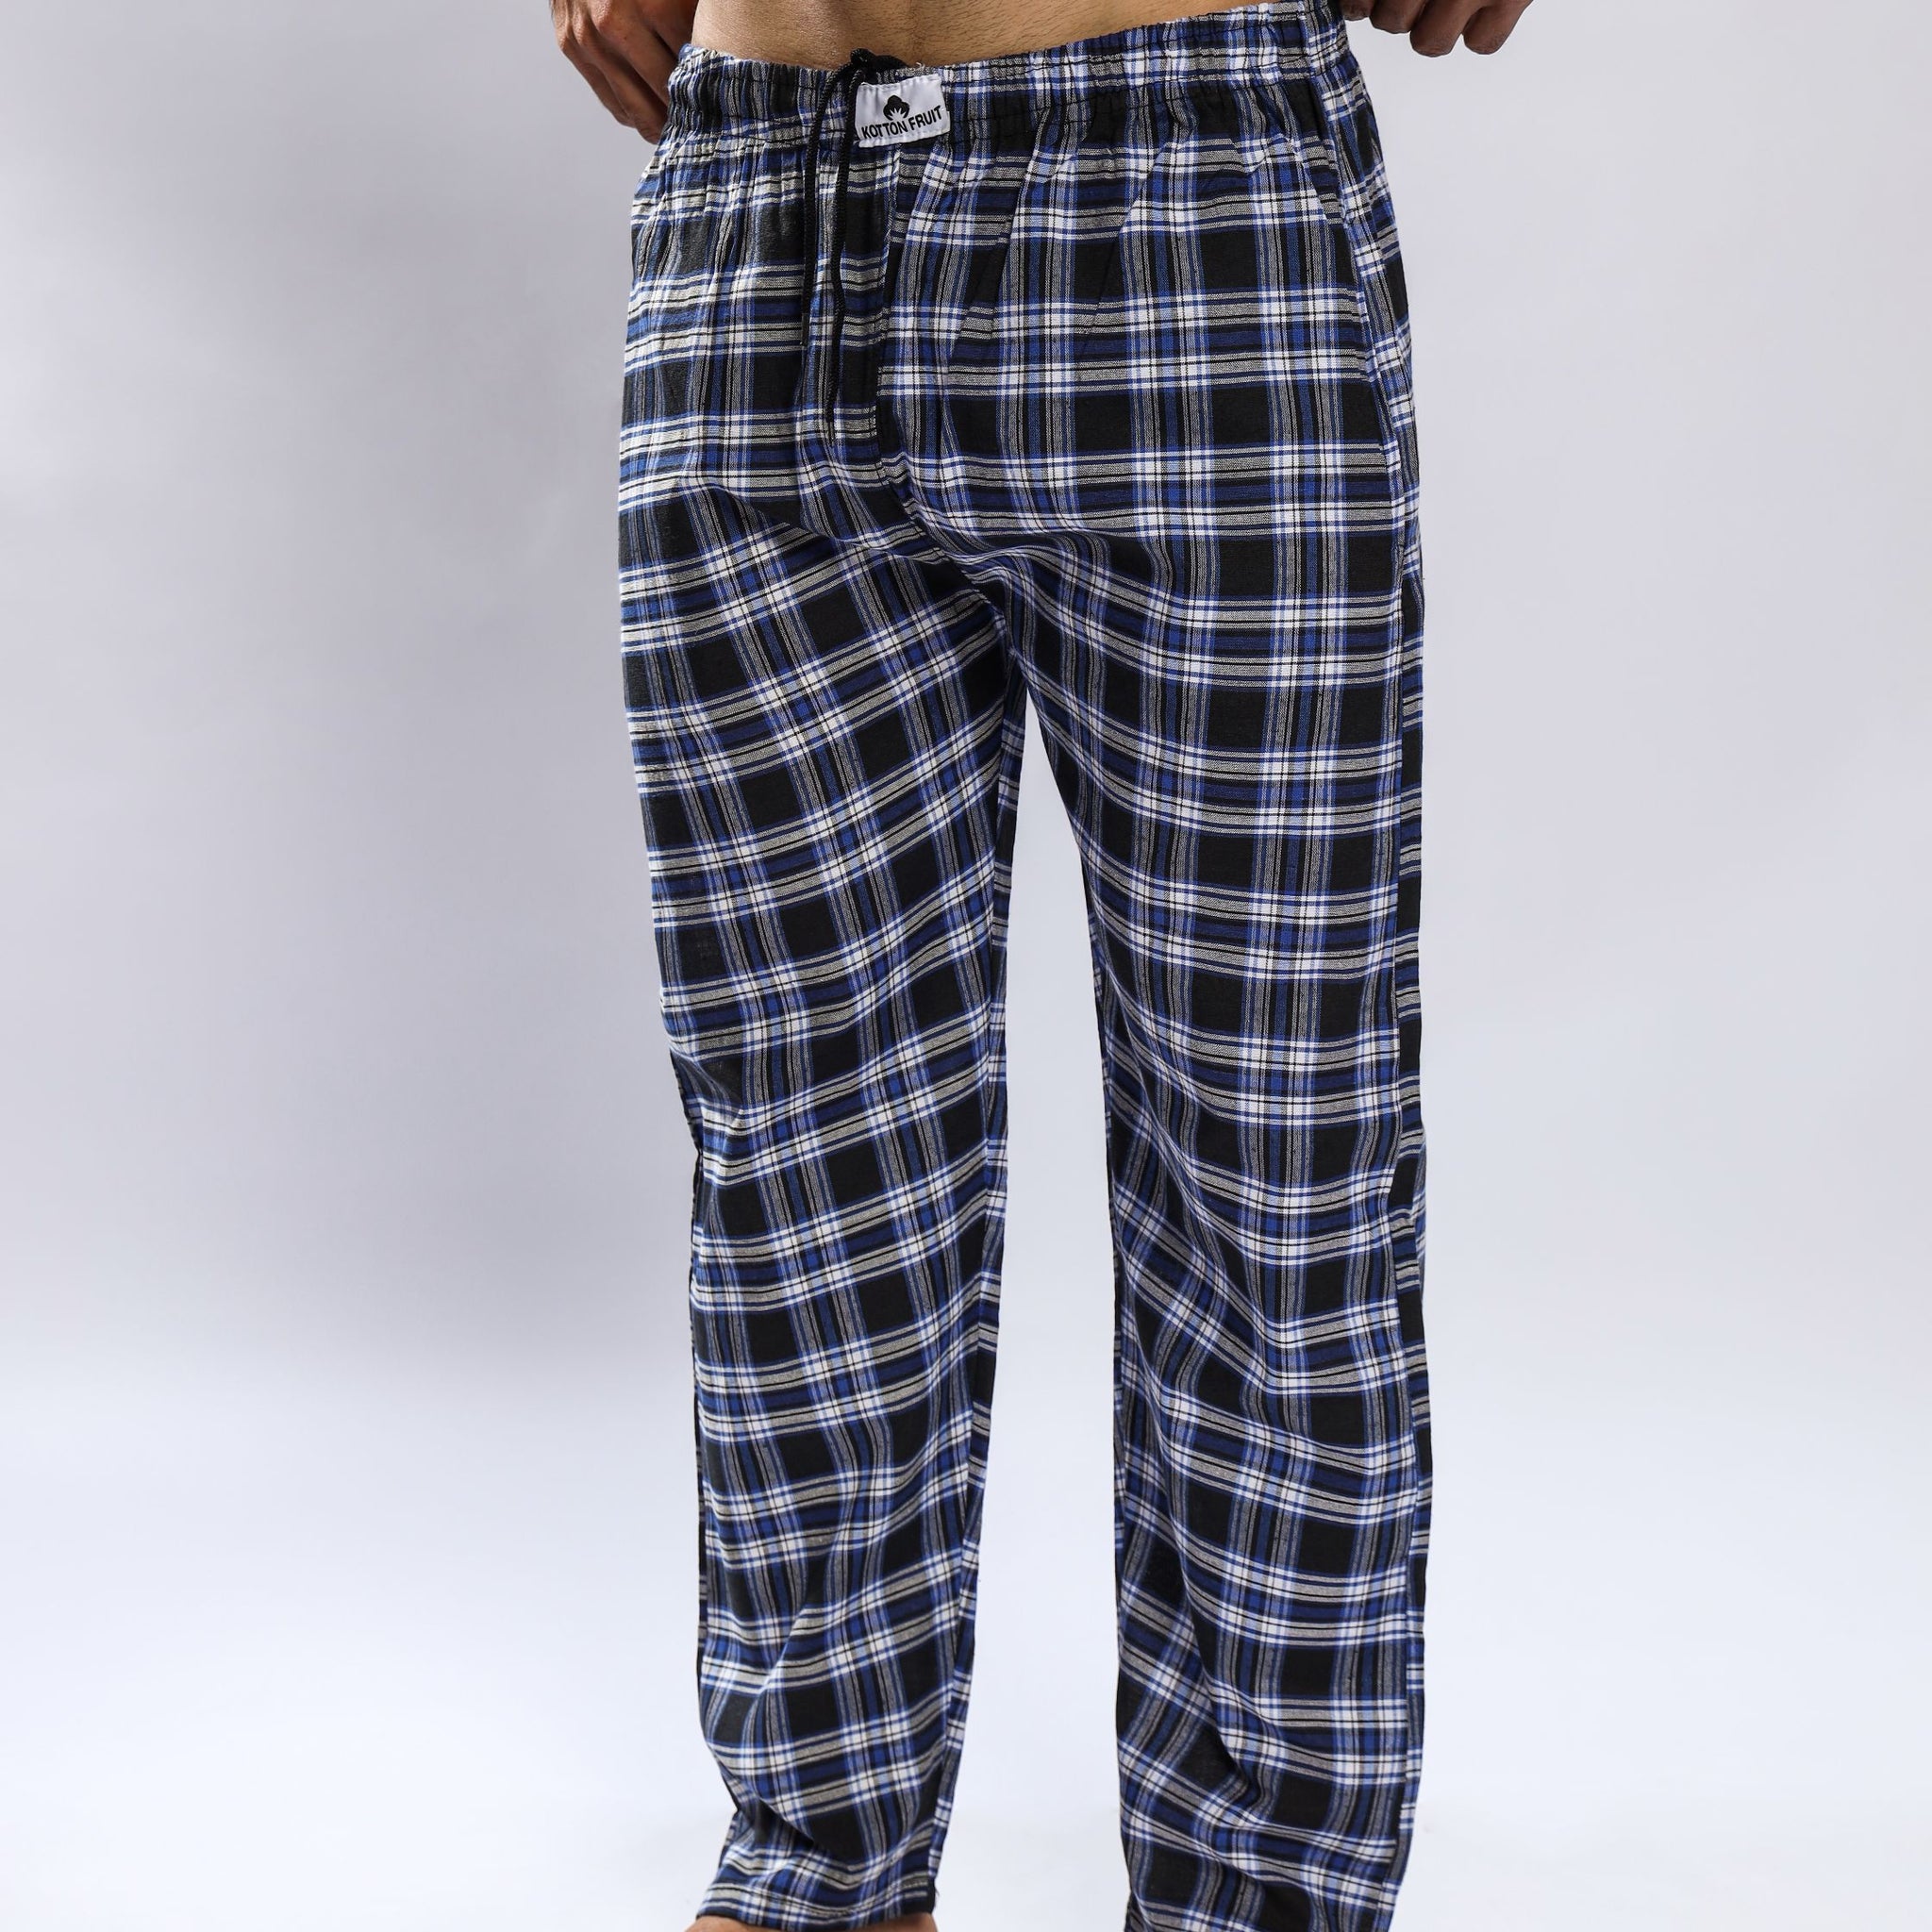 Blue & Black Check Pajama - Unisex